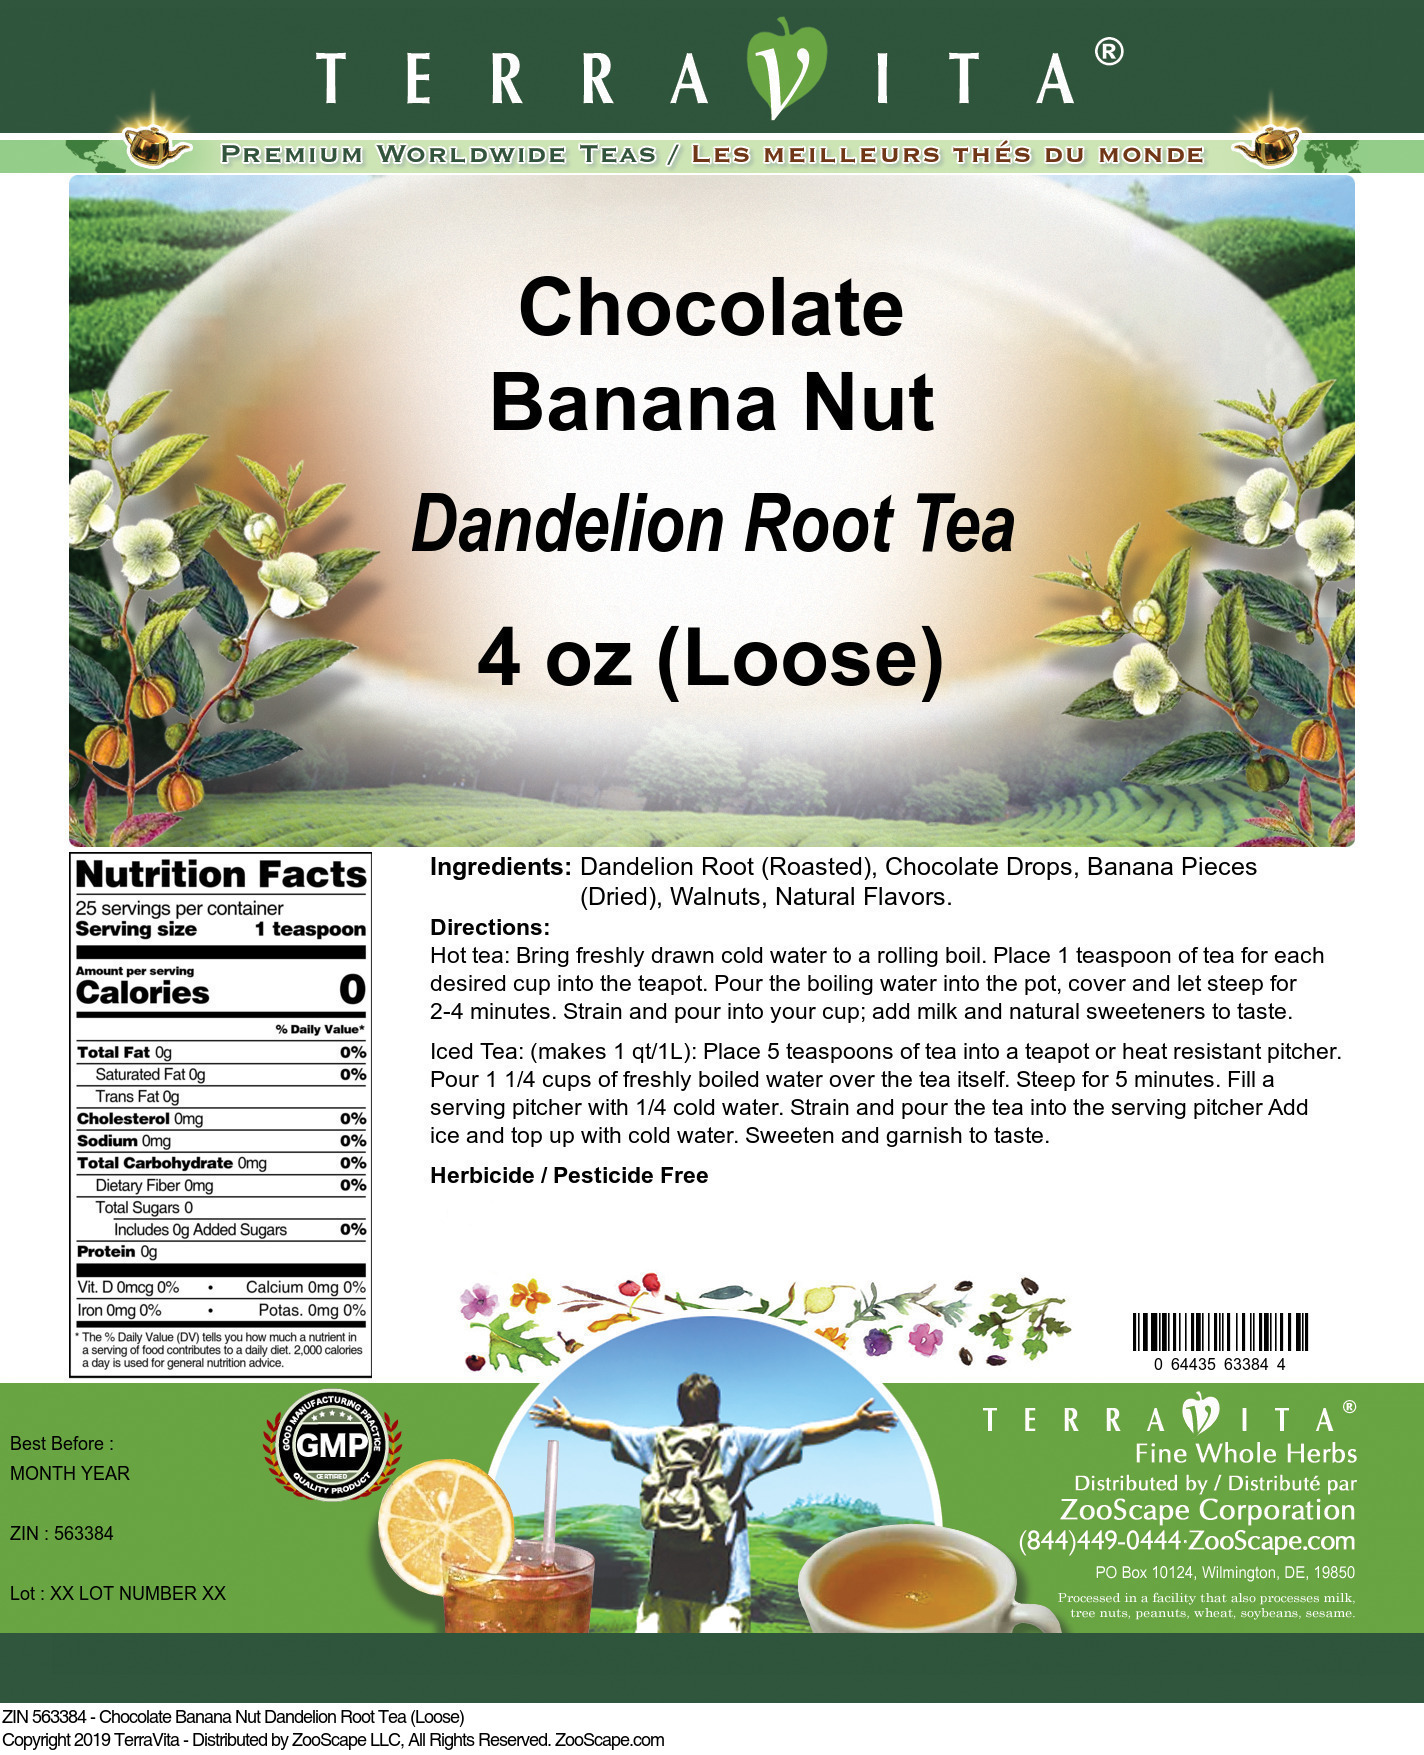 Chocolate Banana Nut Dandelion Root Tea (Loose) - Label